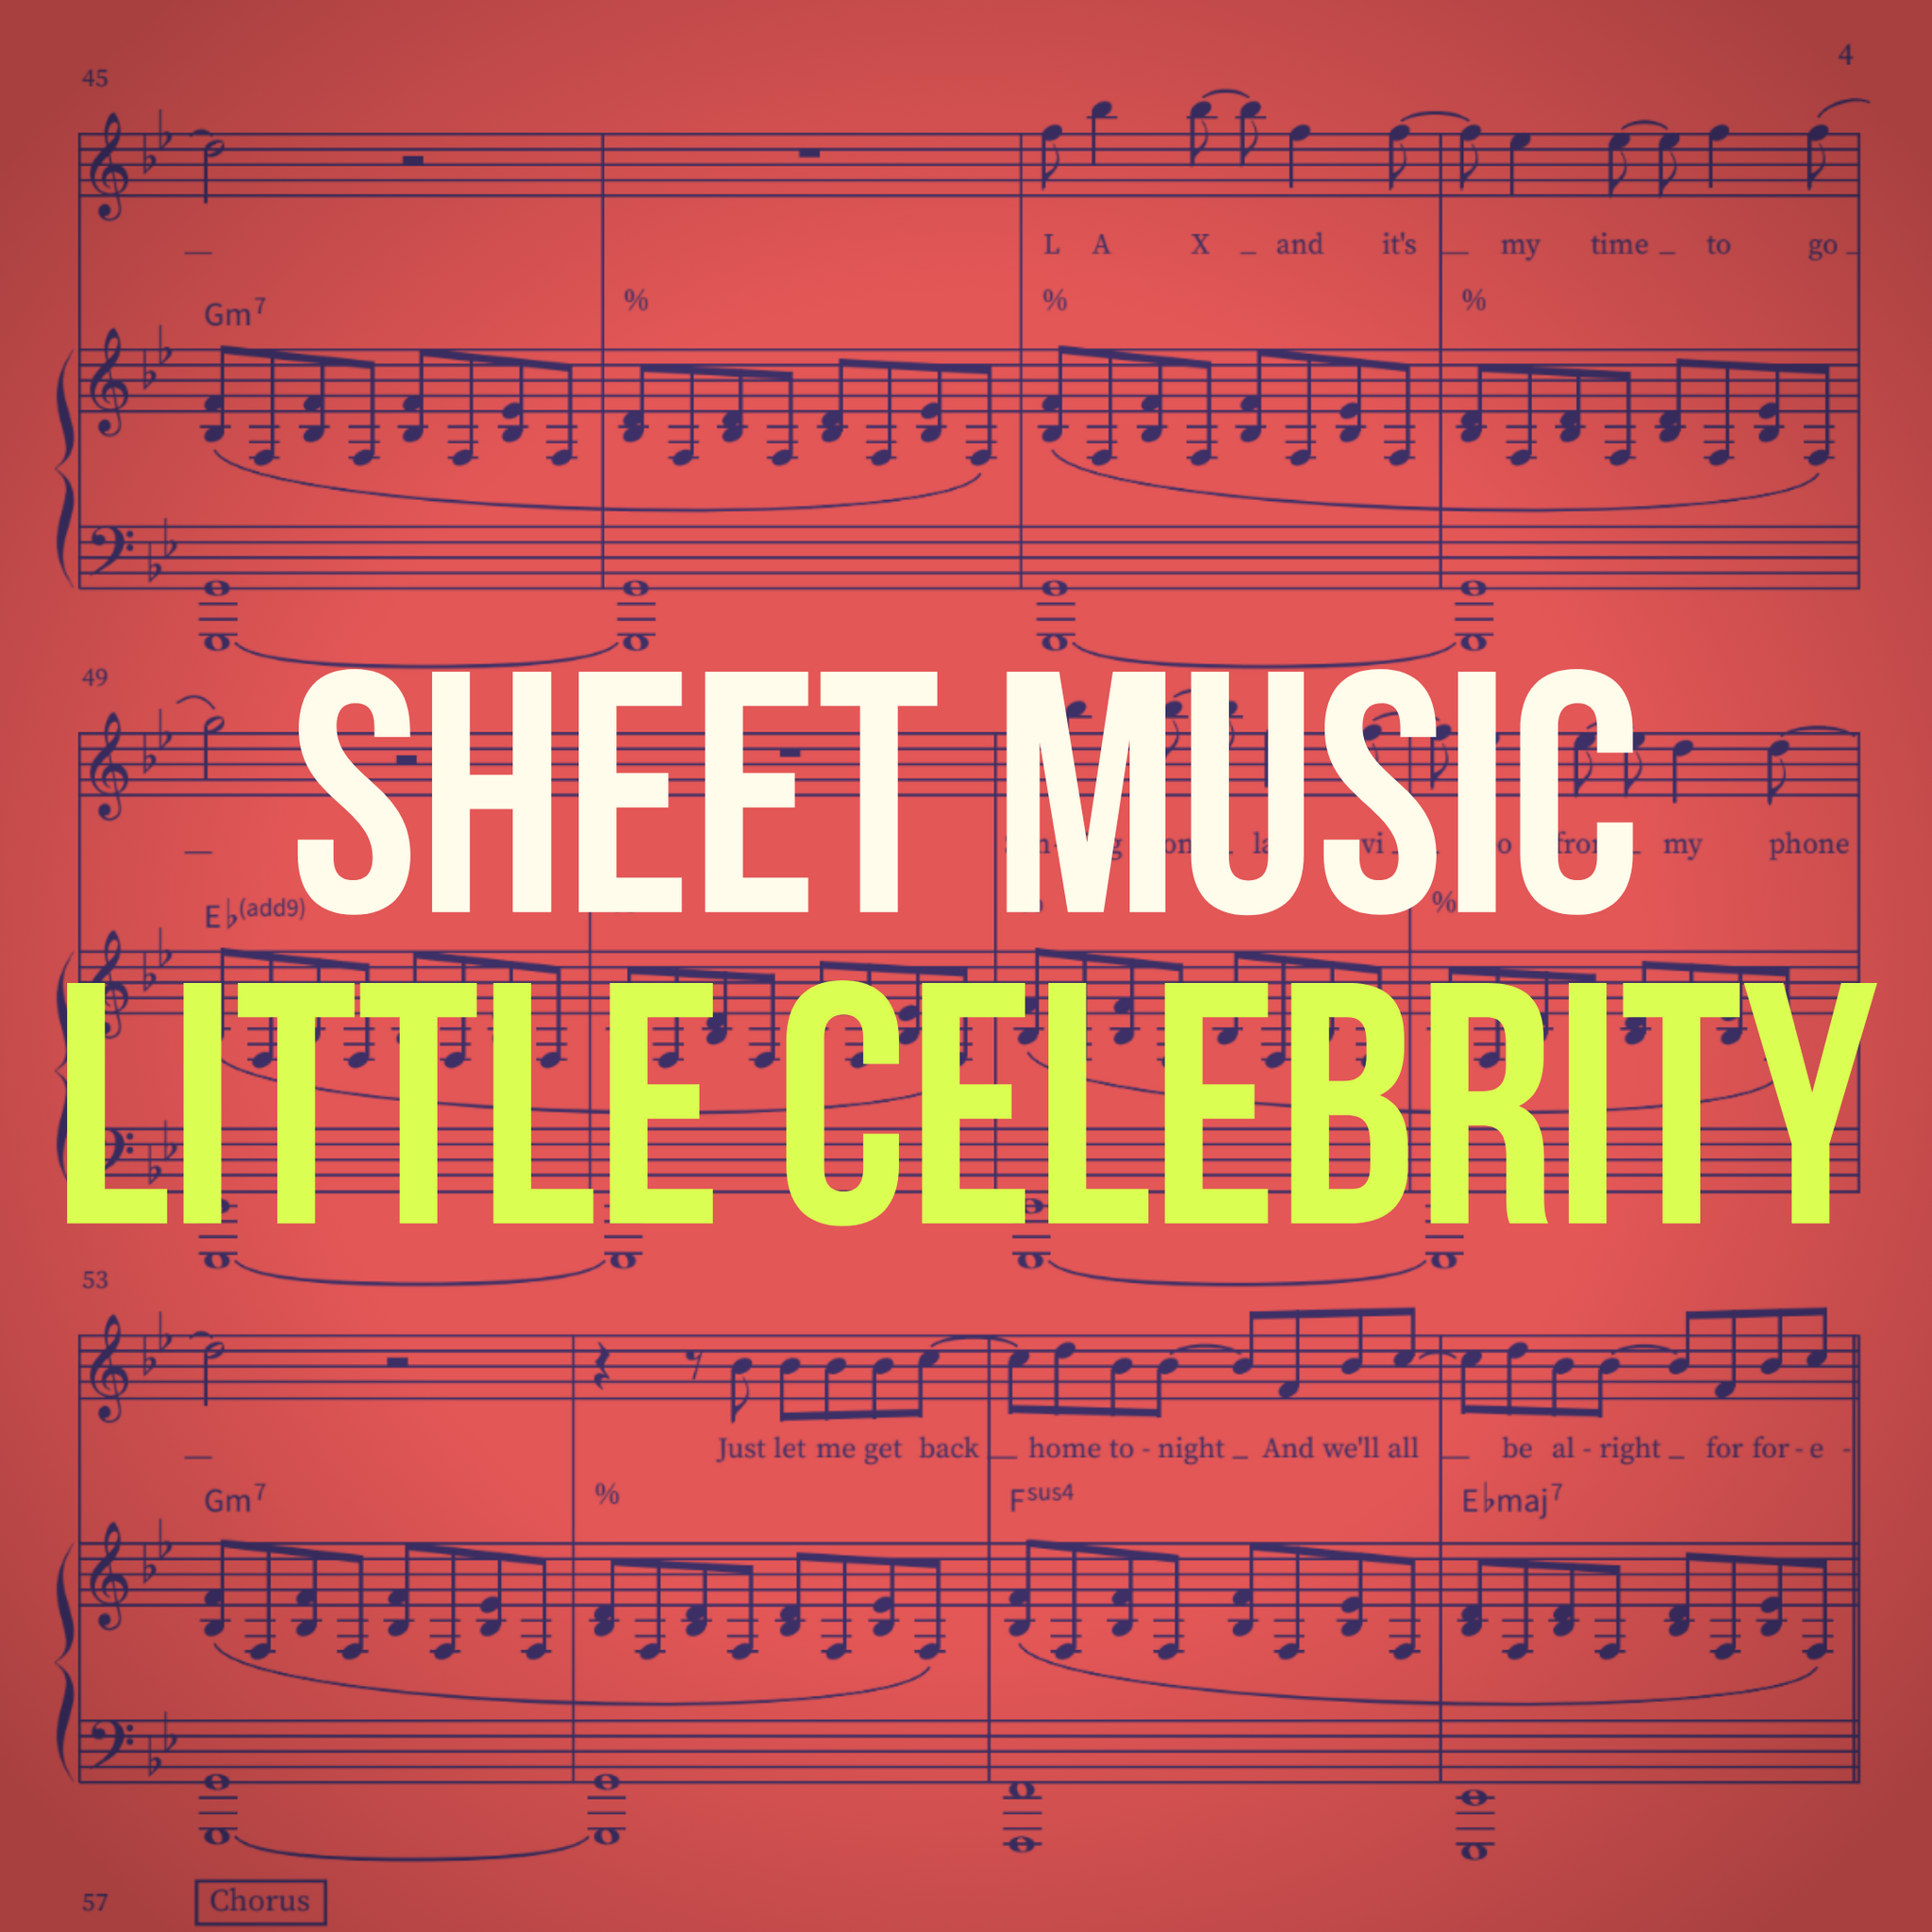 'Little Celebrity' Sheet Music